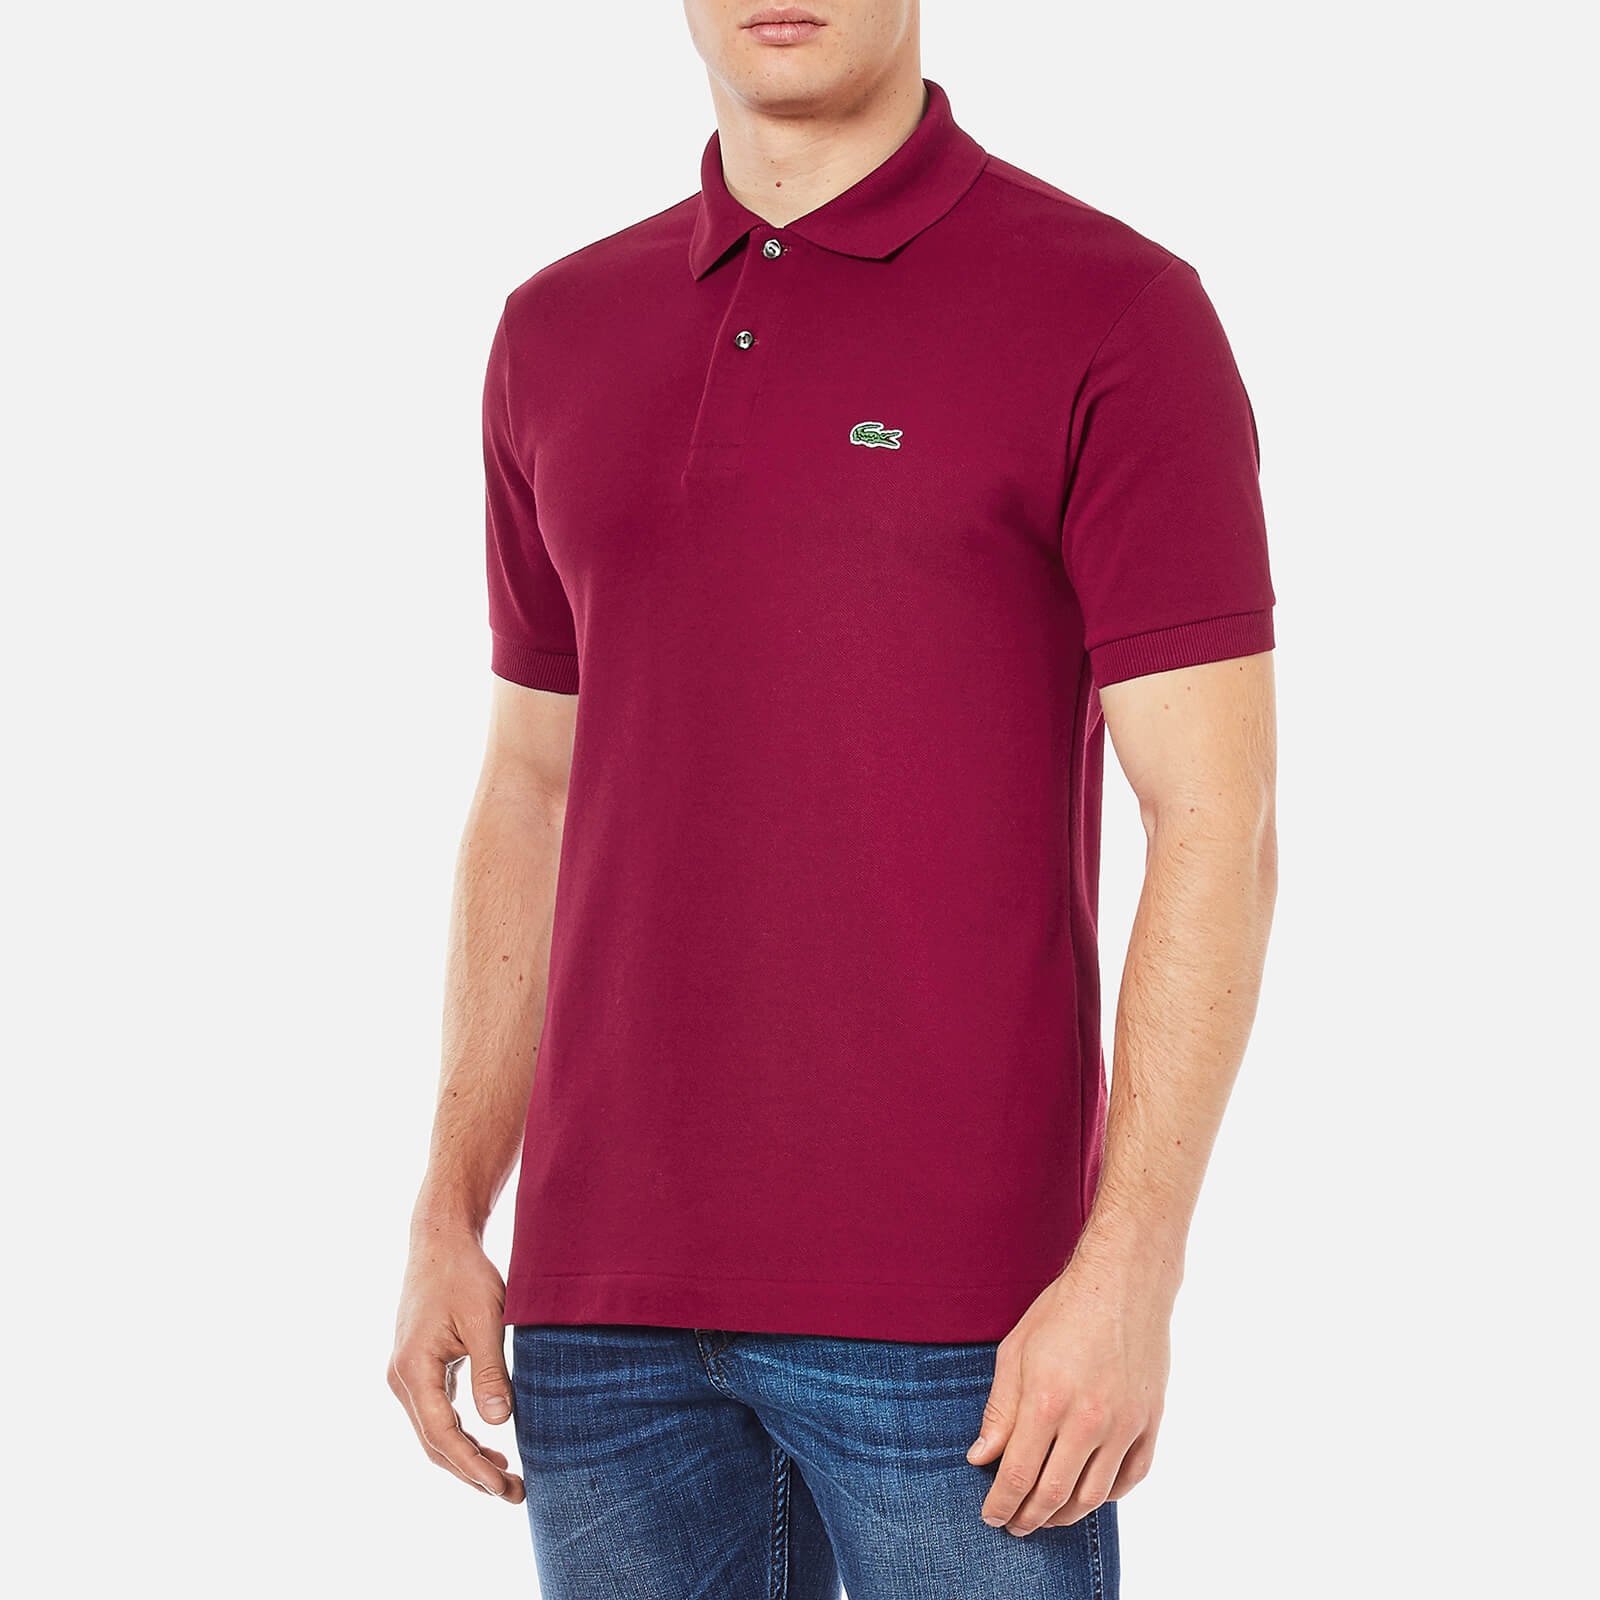 Lacoste Men's Classic Polo Shirt - Burgundy - 2